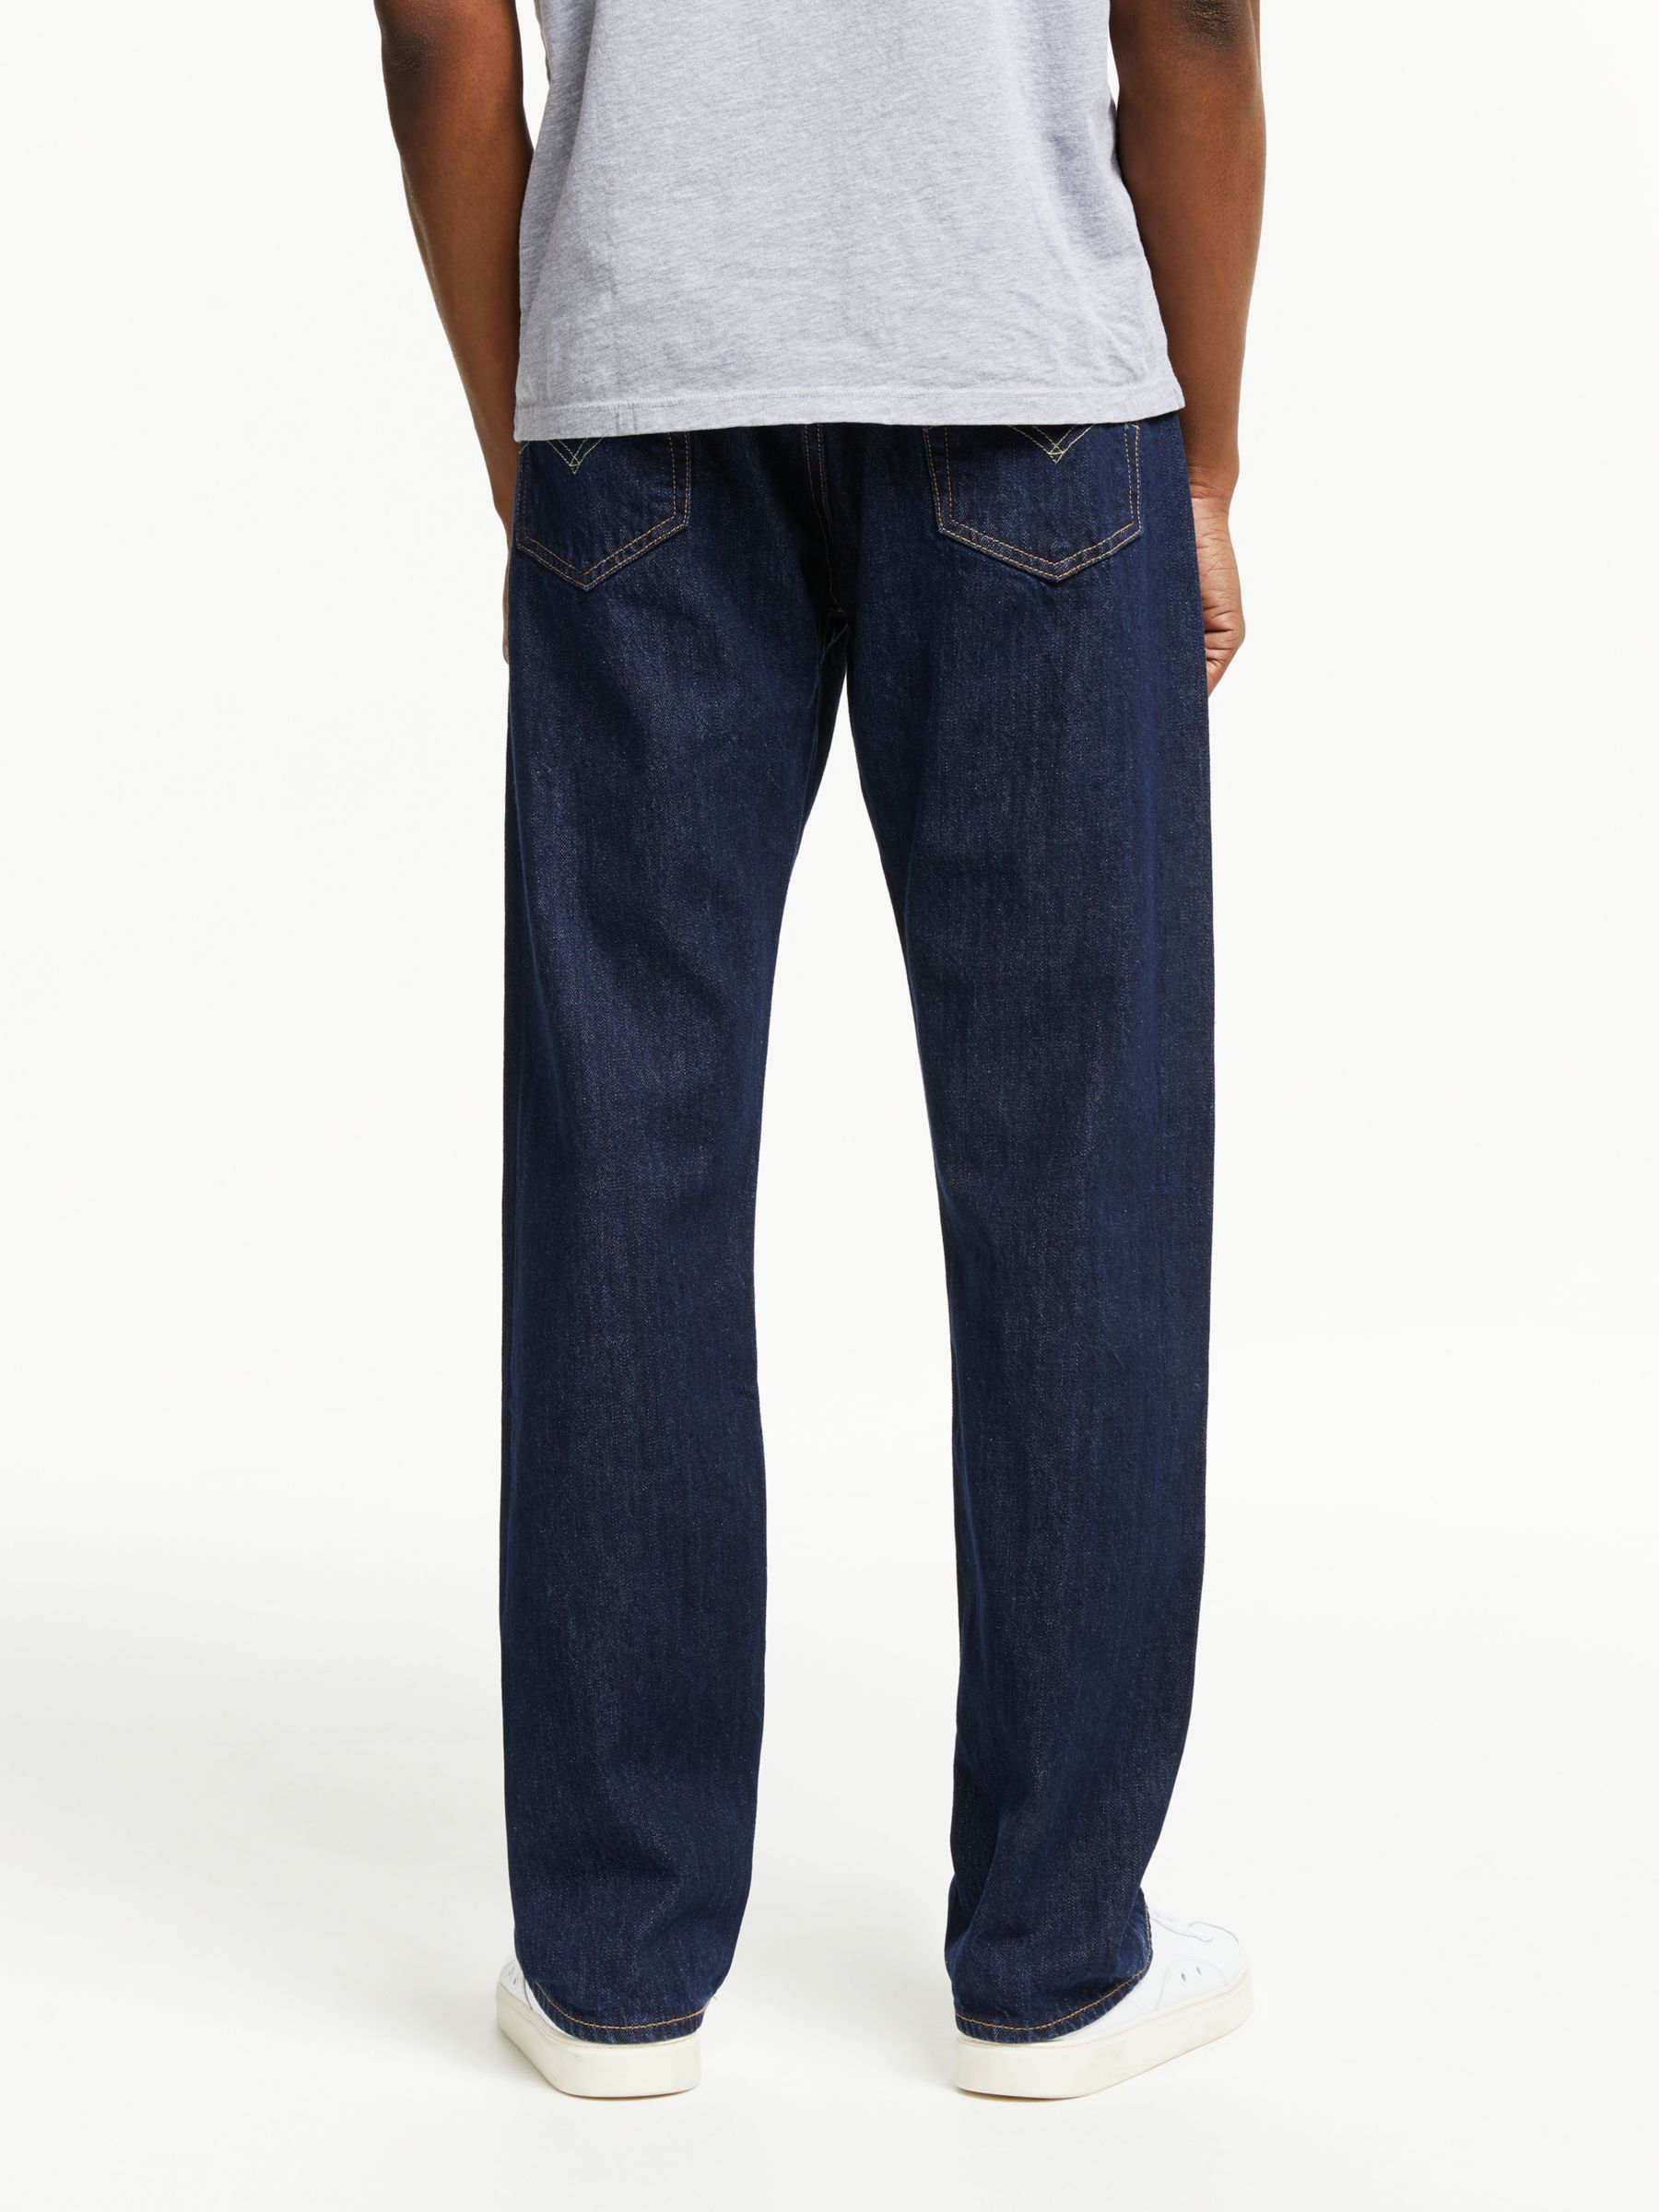 Buy Indigo Blue Jeans for Men by LEVIS Online